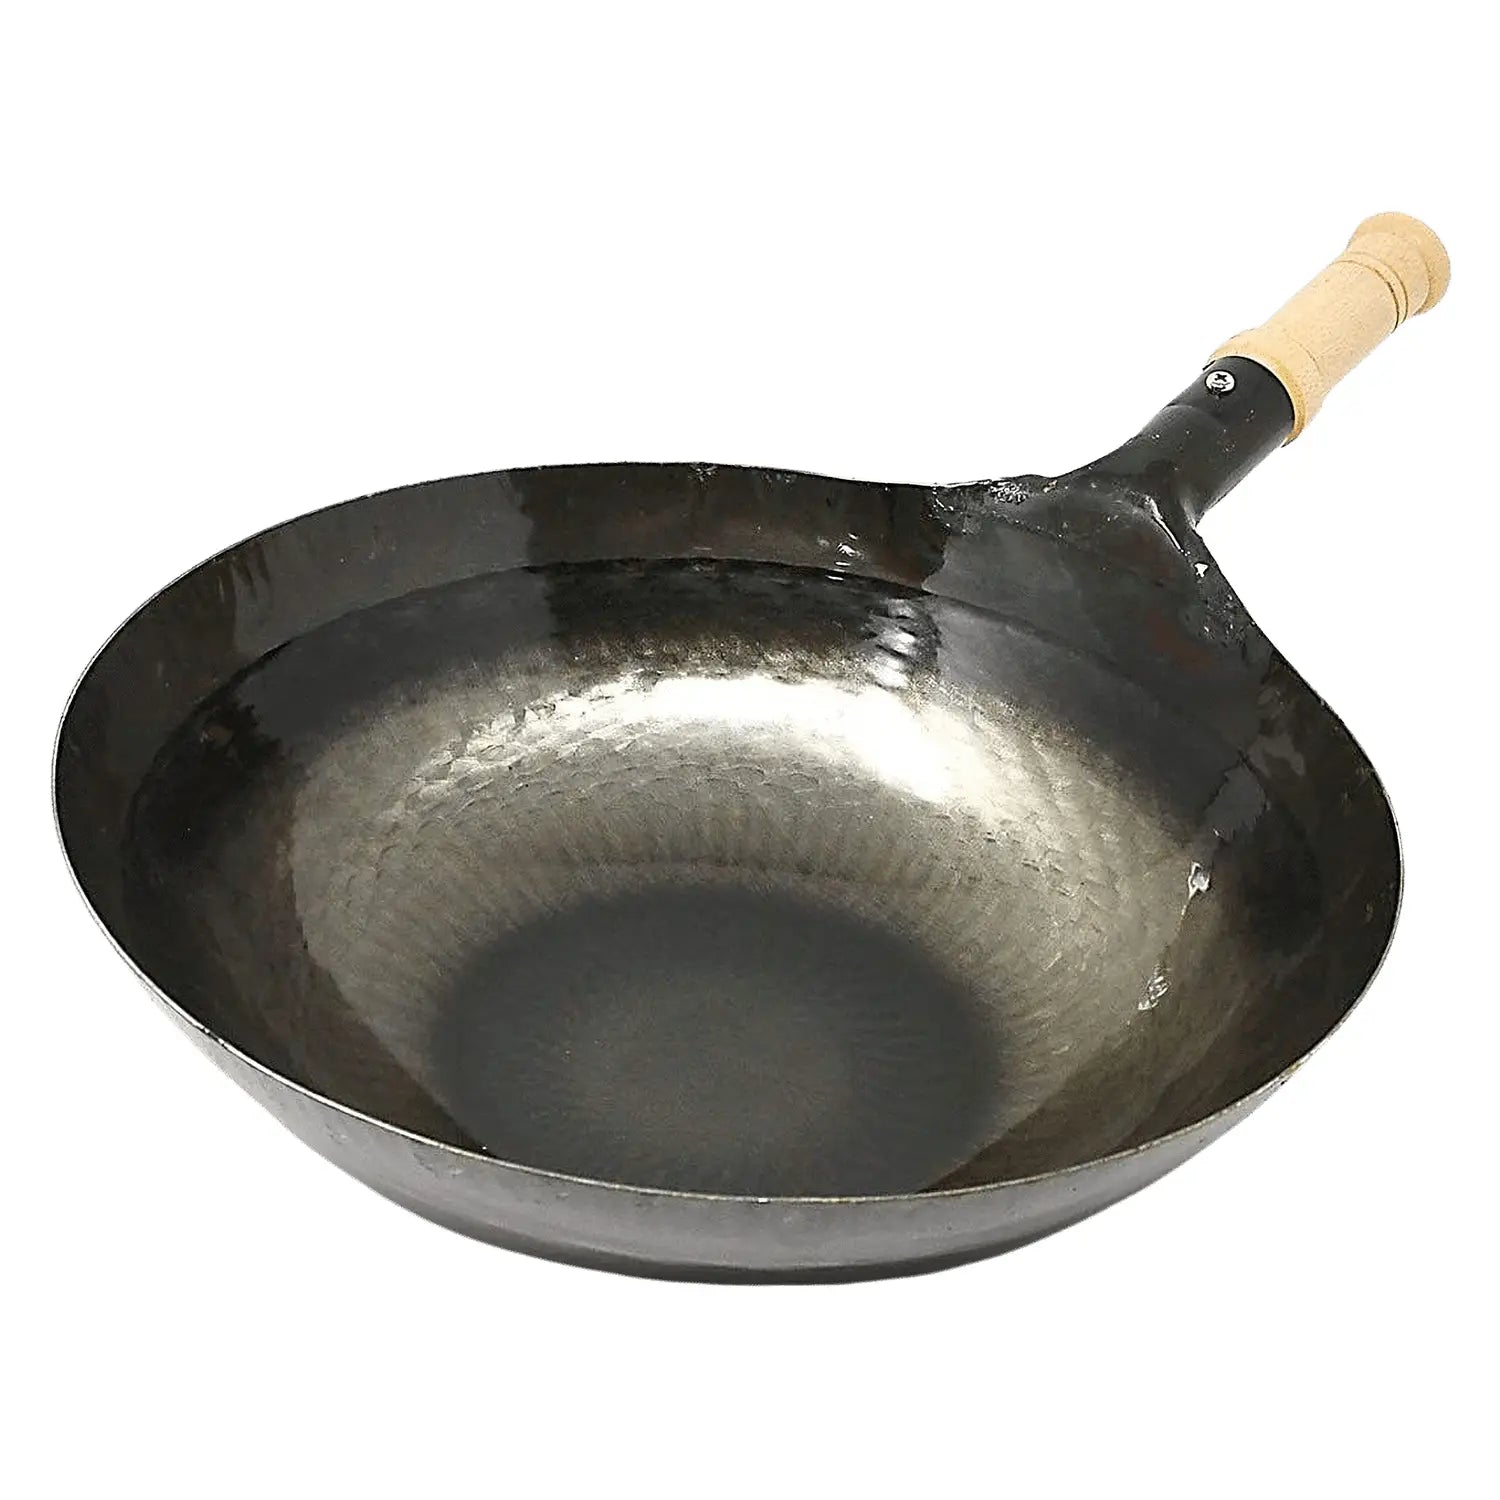 Yamada Brand: Steel Chinese Wok Pan: Hammered made Iron pan, wok